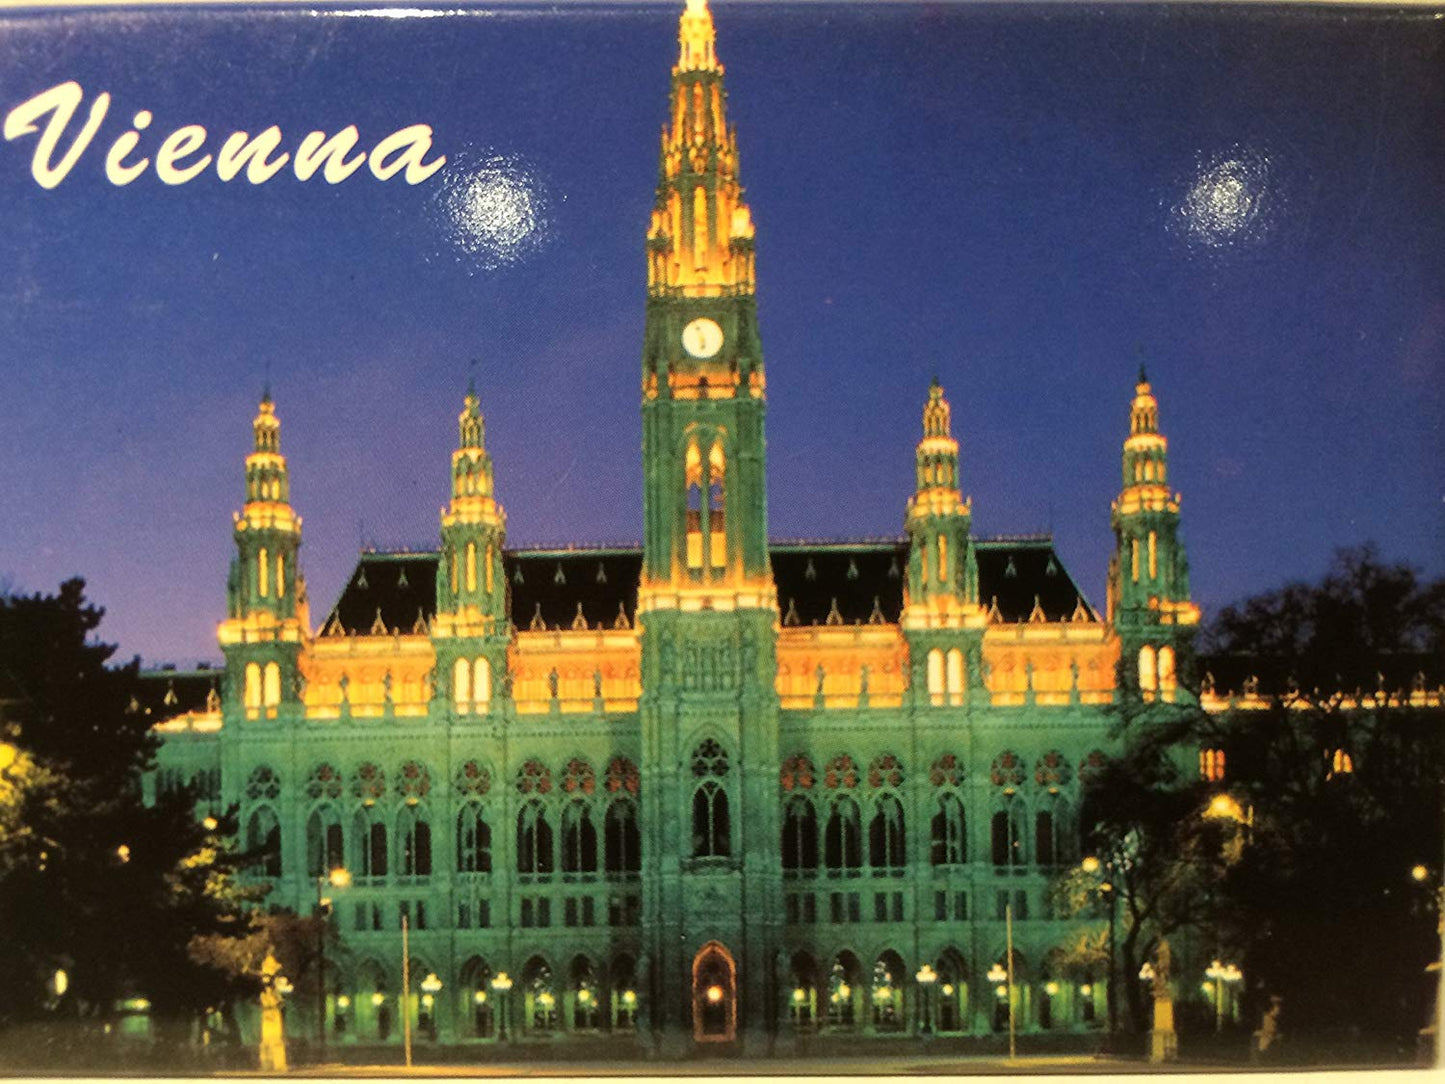 Vienna Austria Rathaus City Hall Fridge Collector's Souvenir Magnet 2.5 inches X 3.5 inches